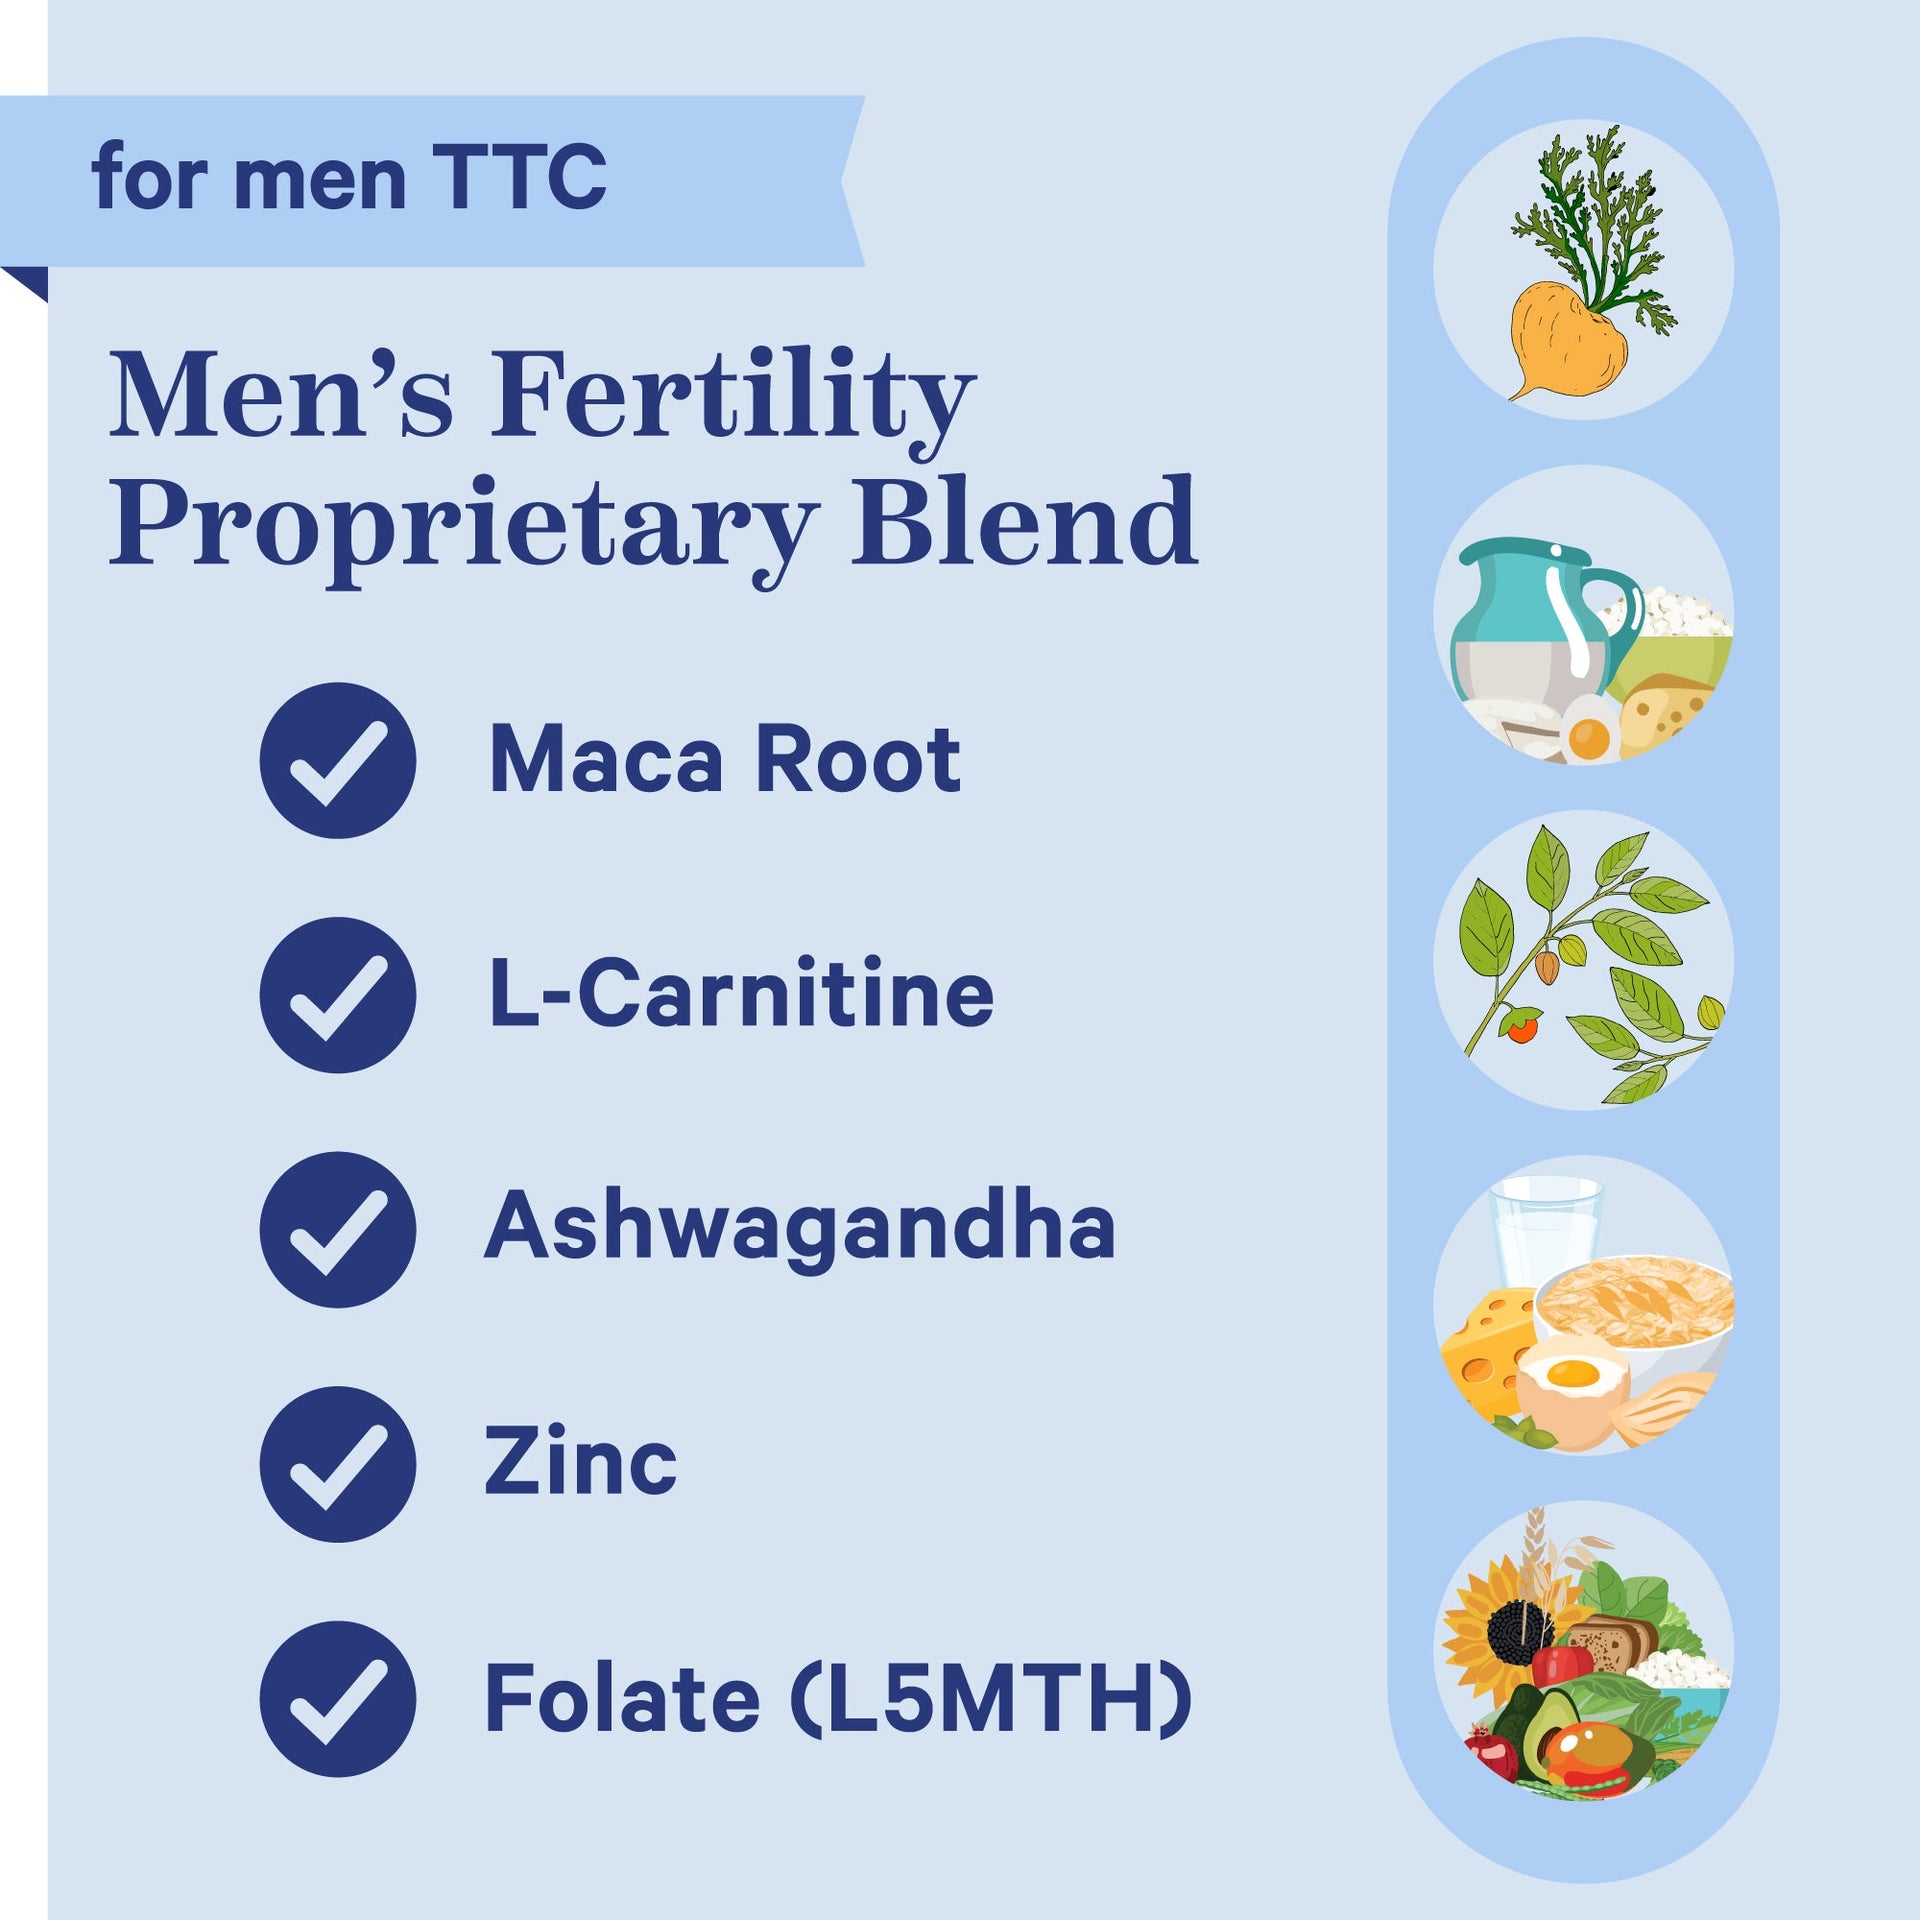 Men's Fertility Support